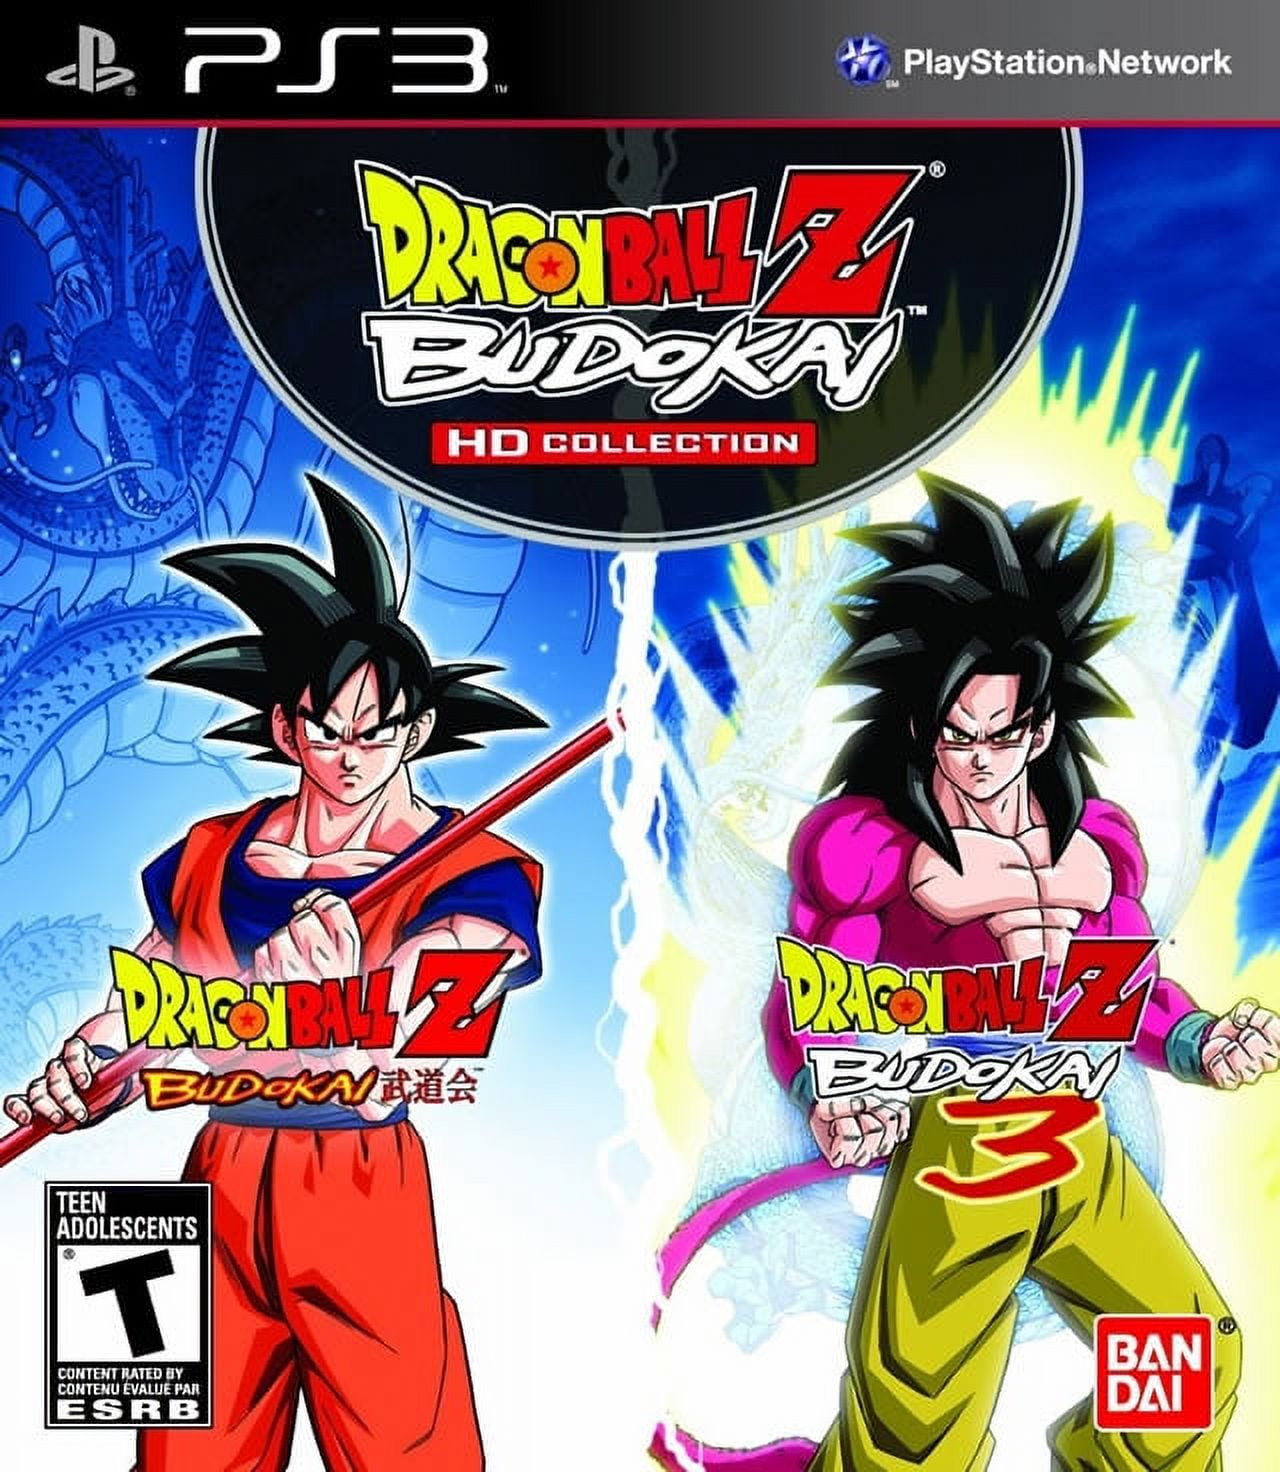 Dragon Ball Z Budokai 3 PlayStation2 Japan Ver.